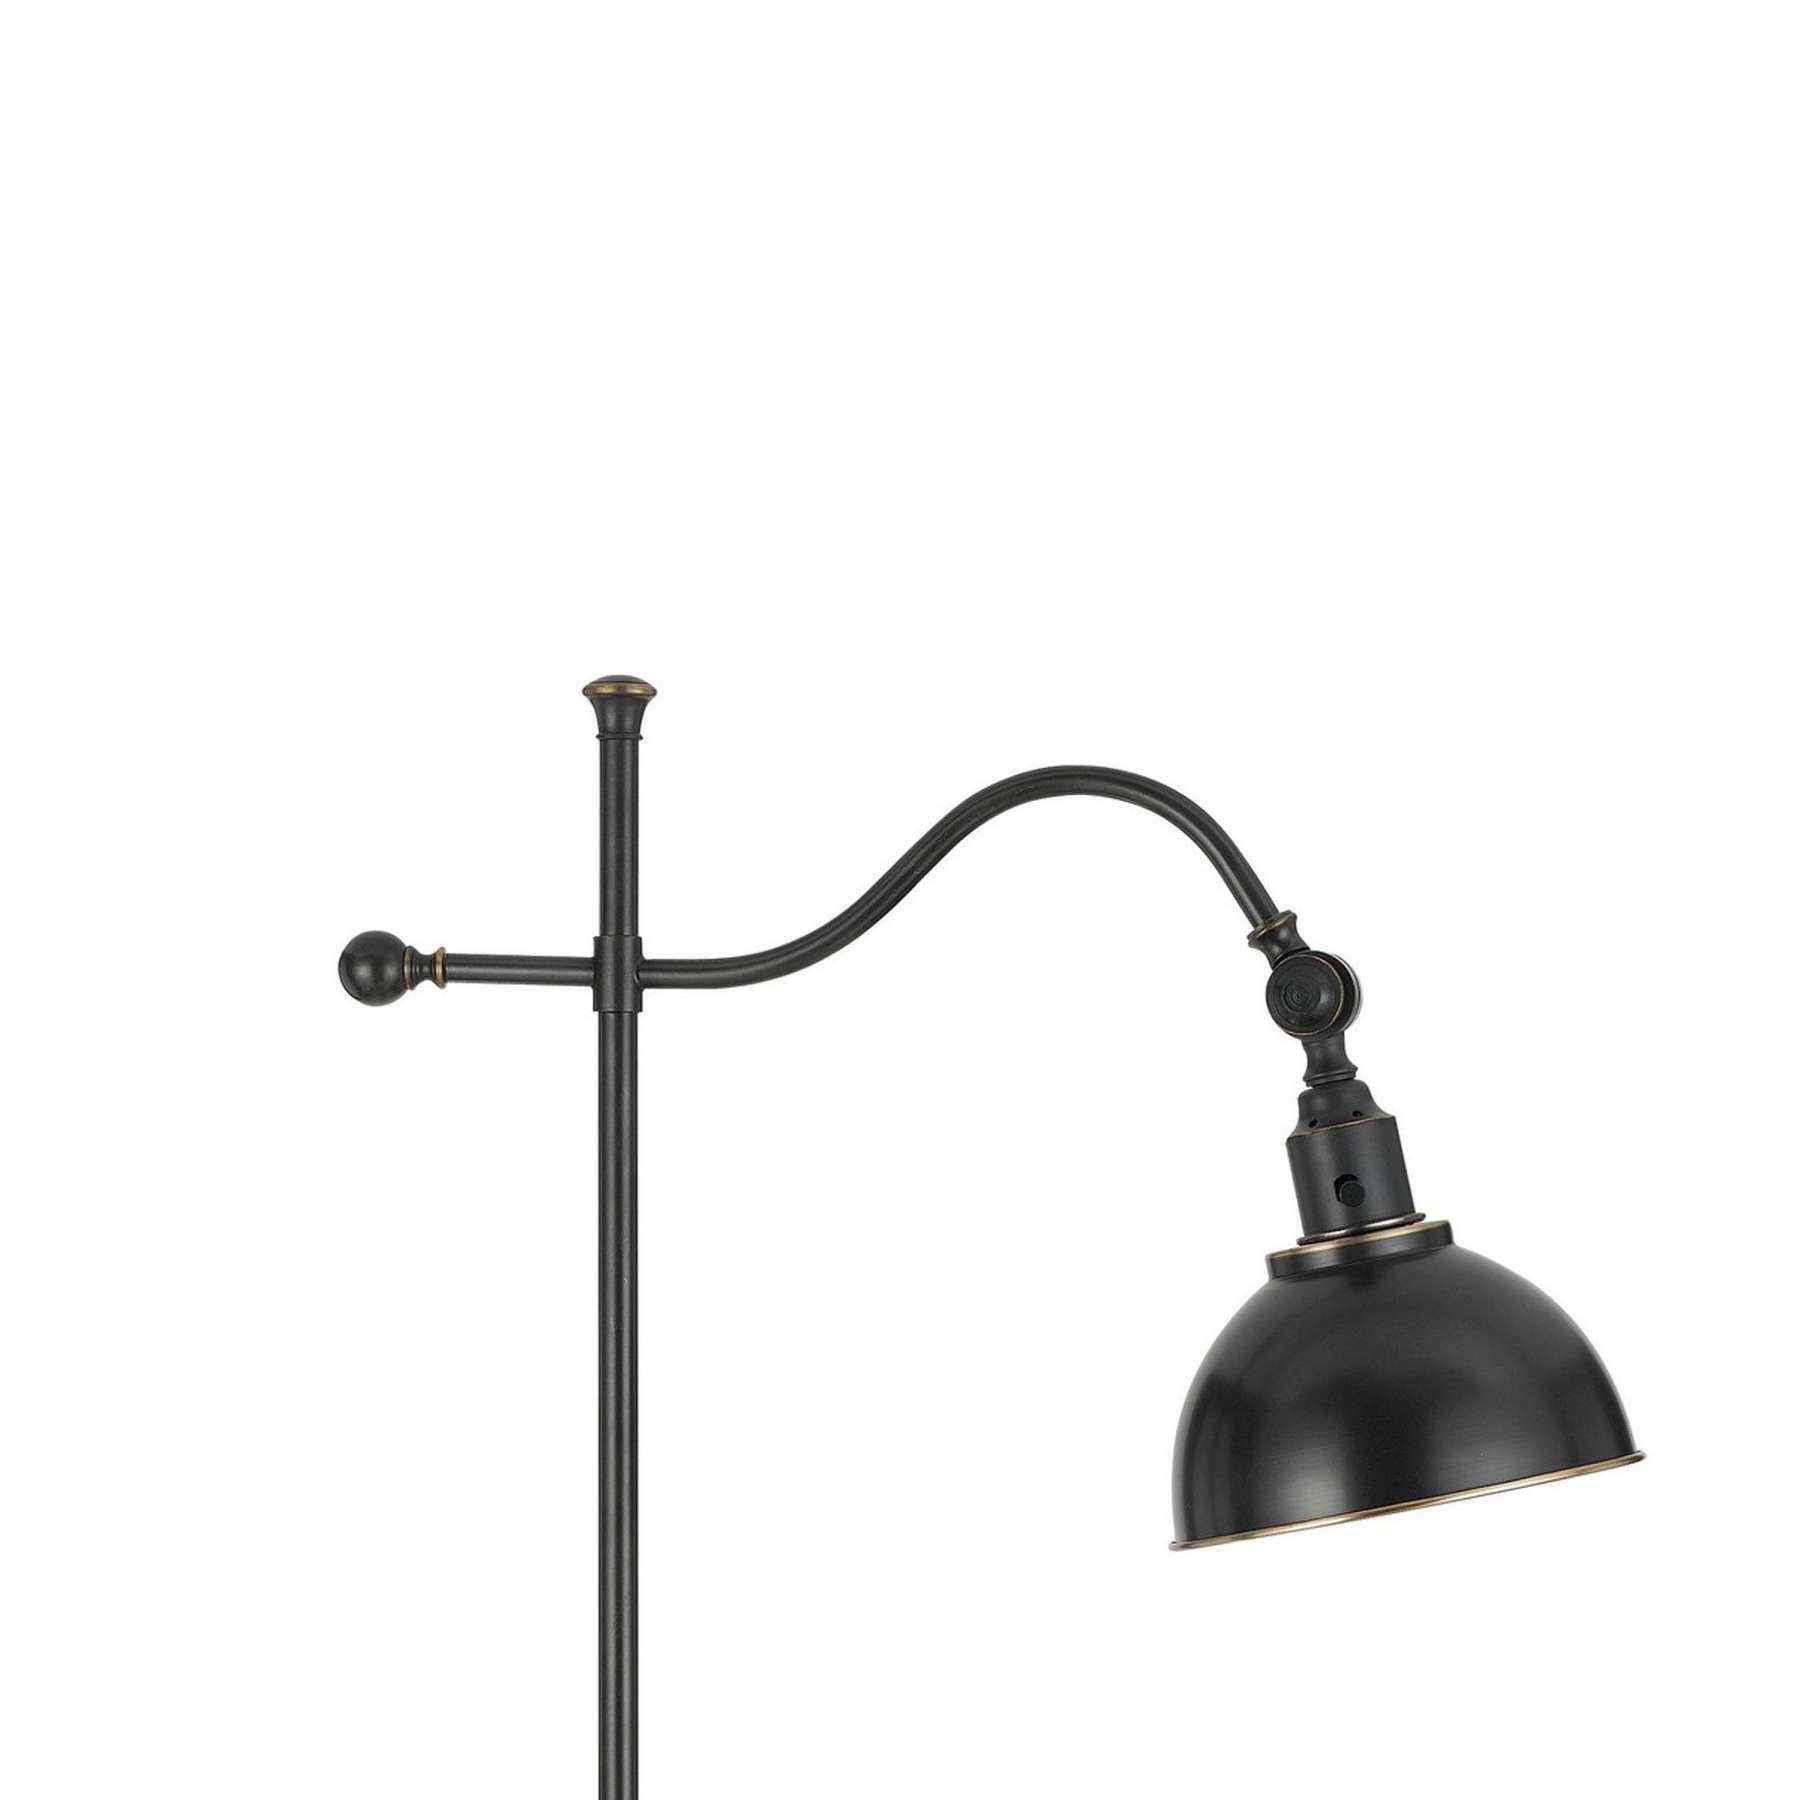 60 Watt Metal Lamp With Adjustable Pole And Bowl Shade, Black By Benzara